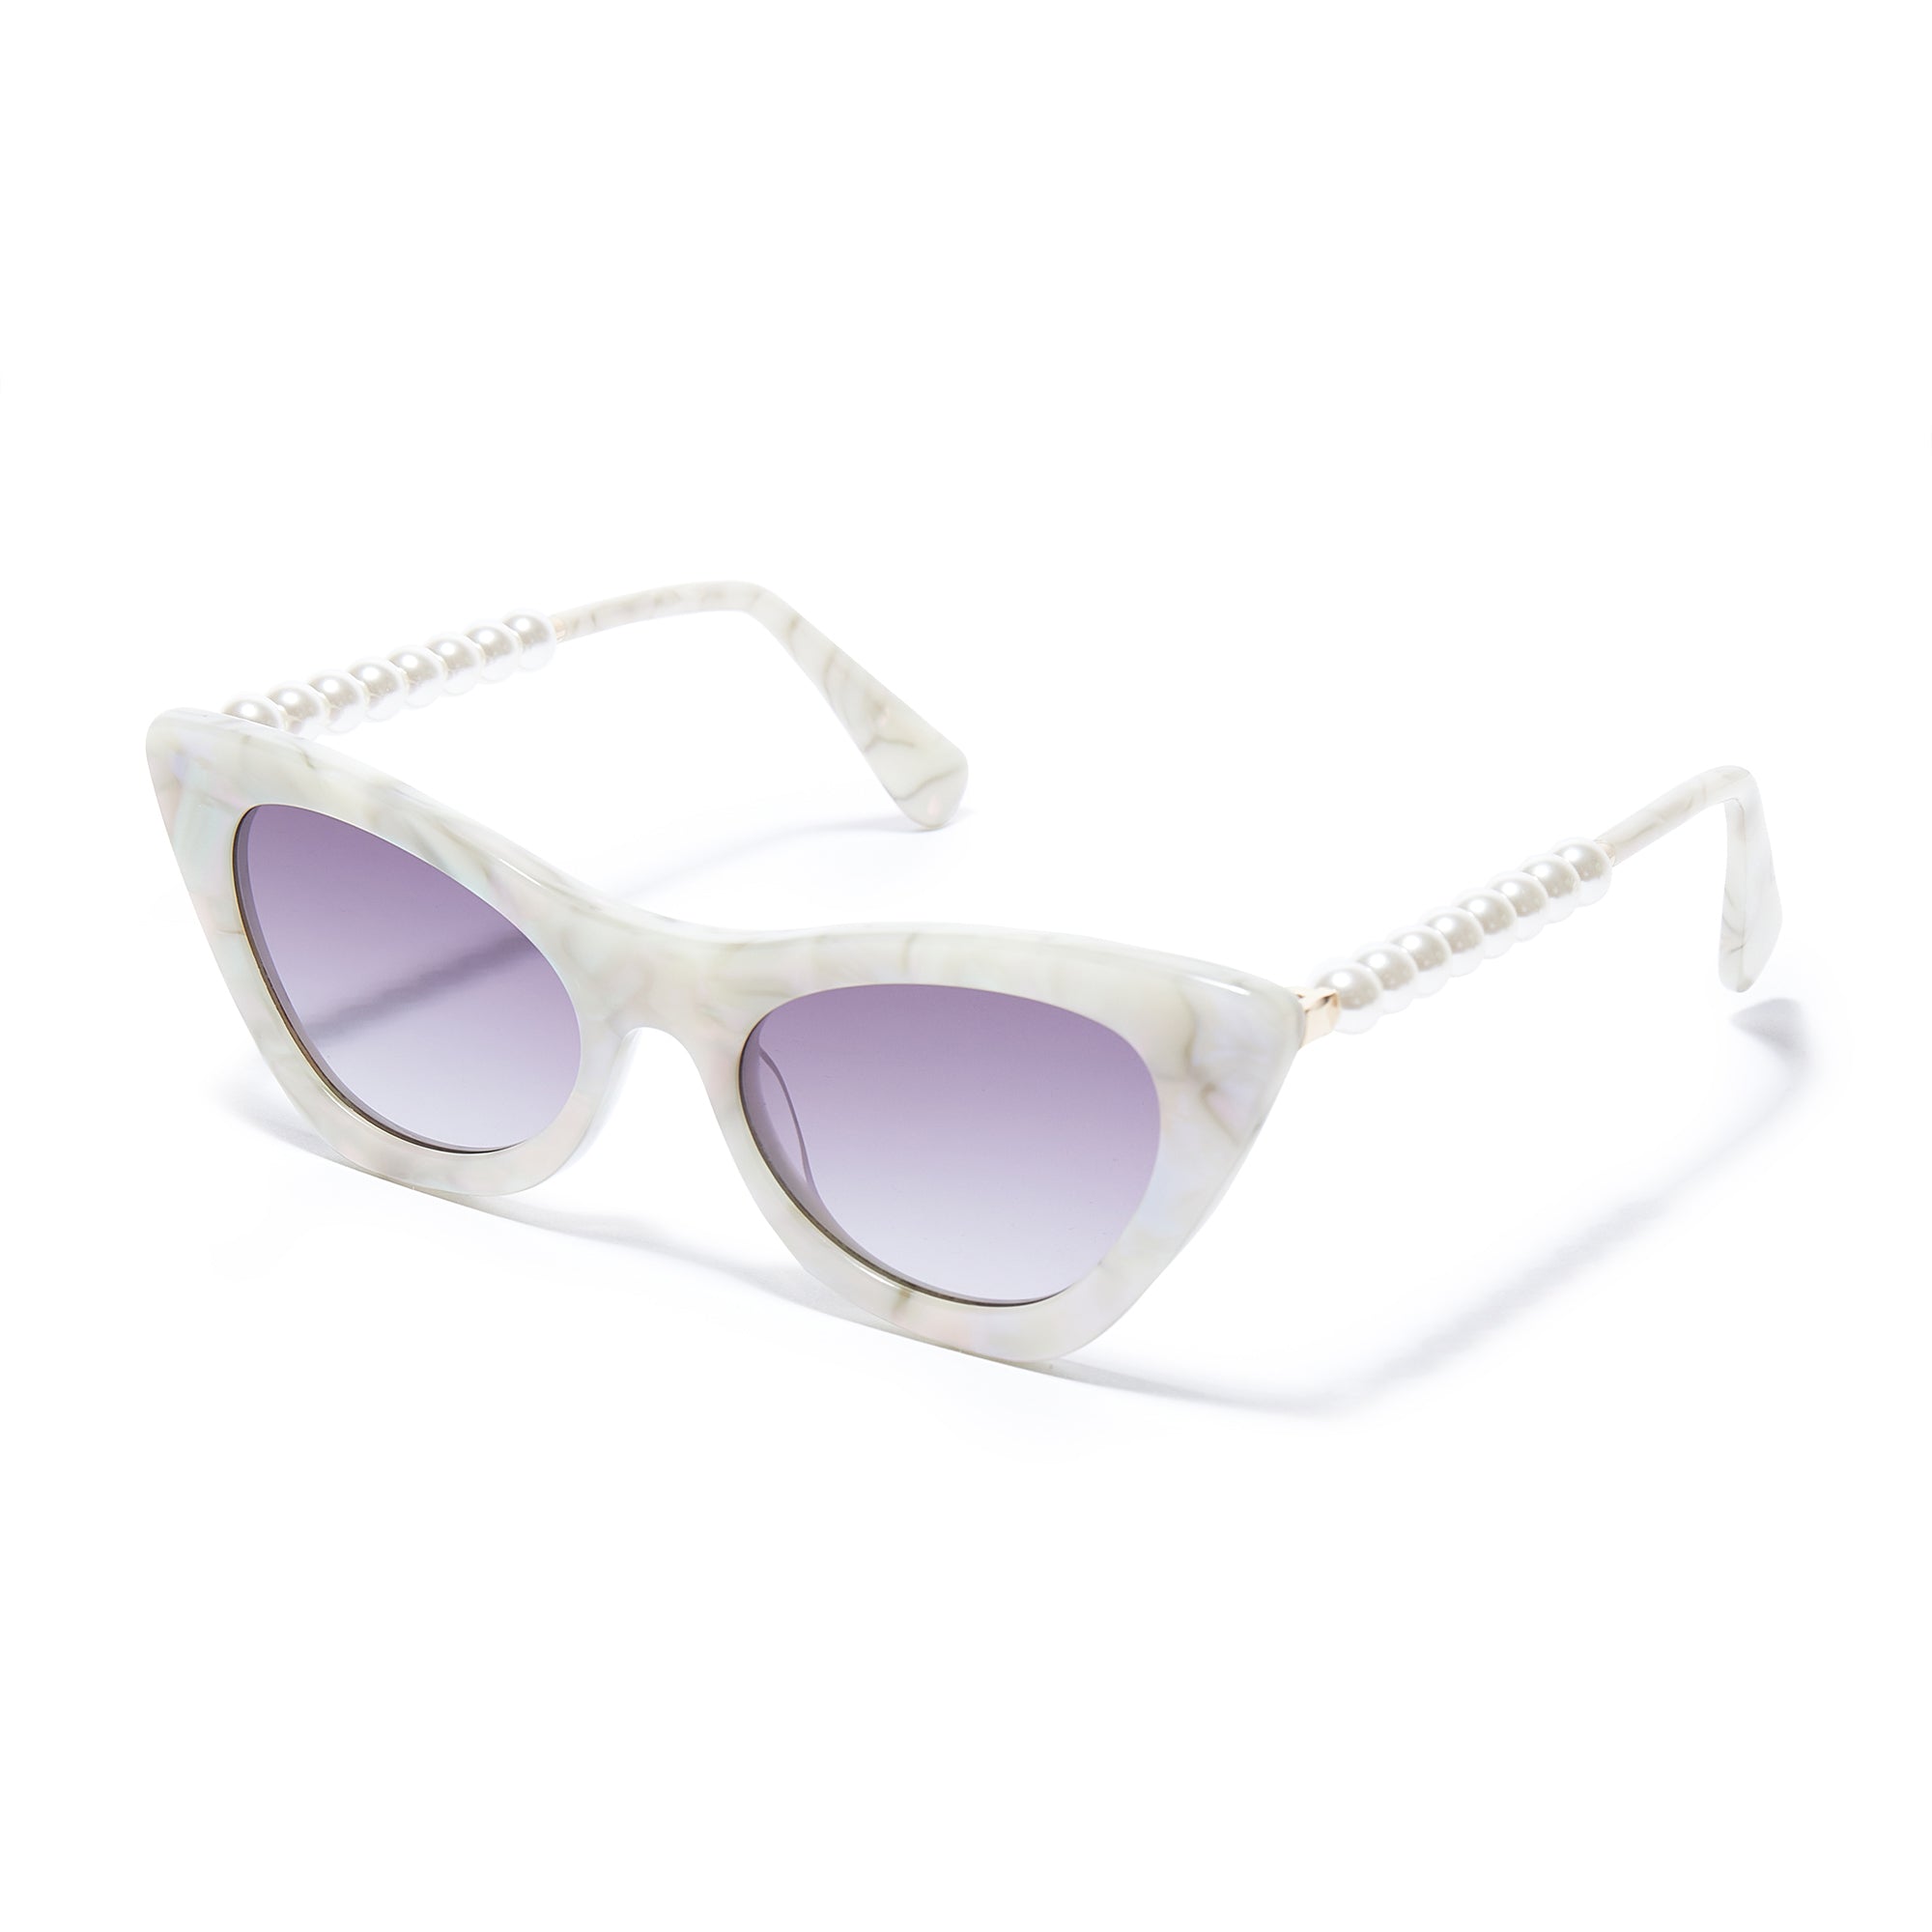 Kamalikulture Women's Square Cat Eye Sunglasses